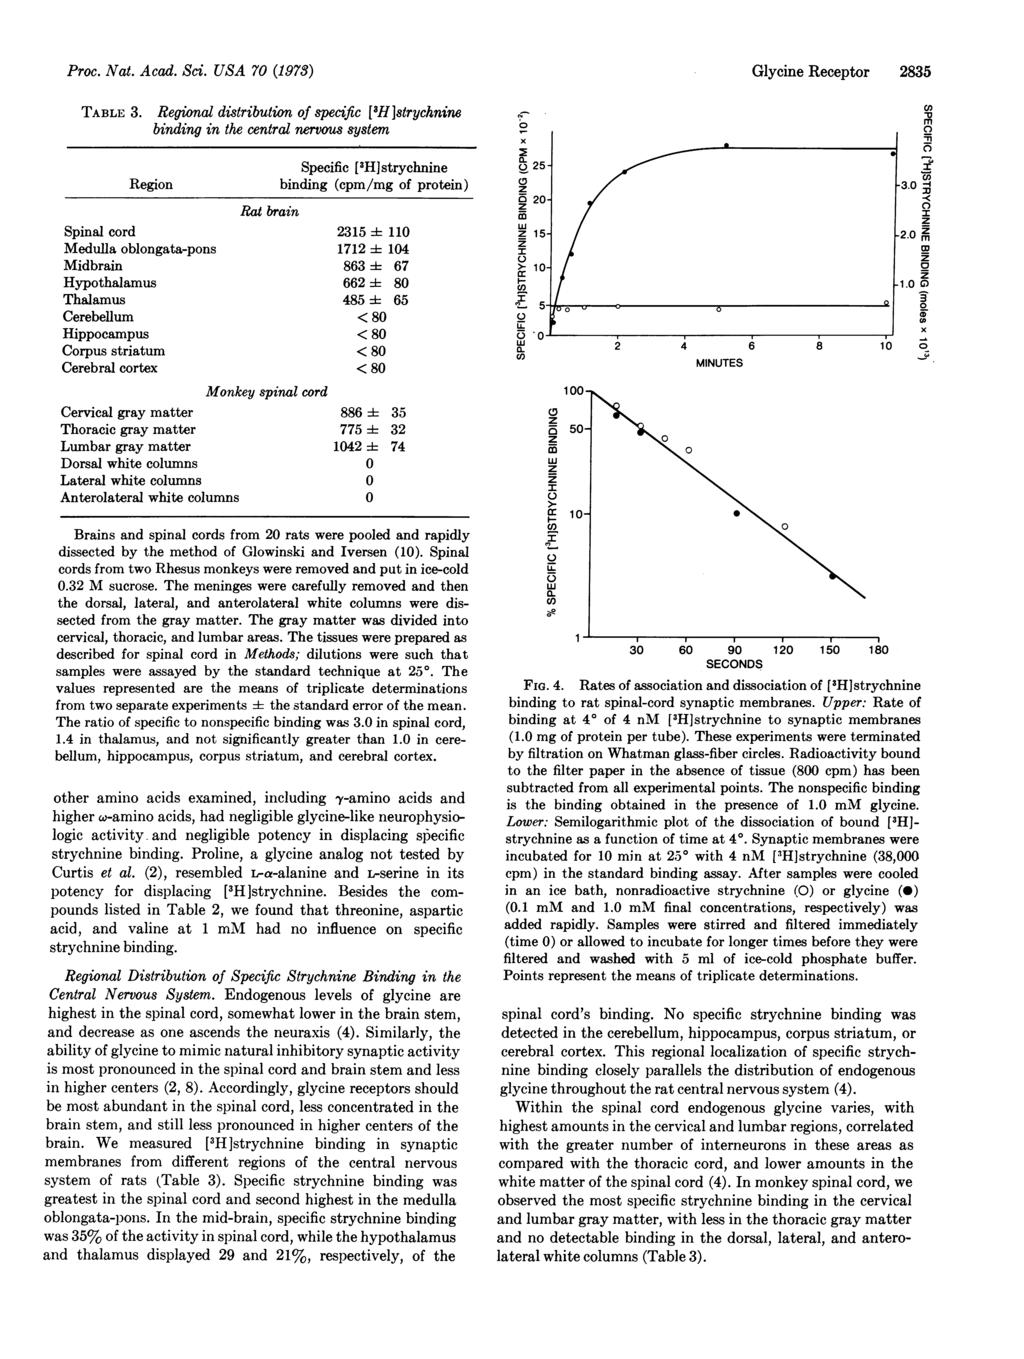 Proc. Nat. Acad. Sci. USA 70 (1973) TABLE 3.